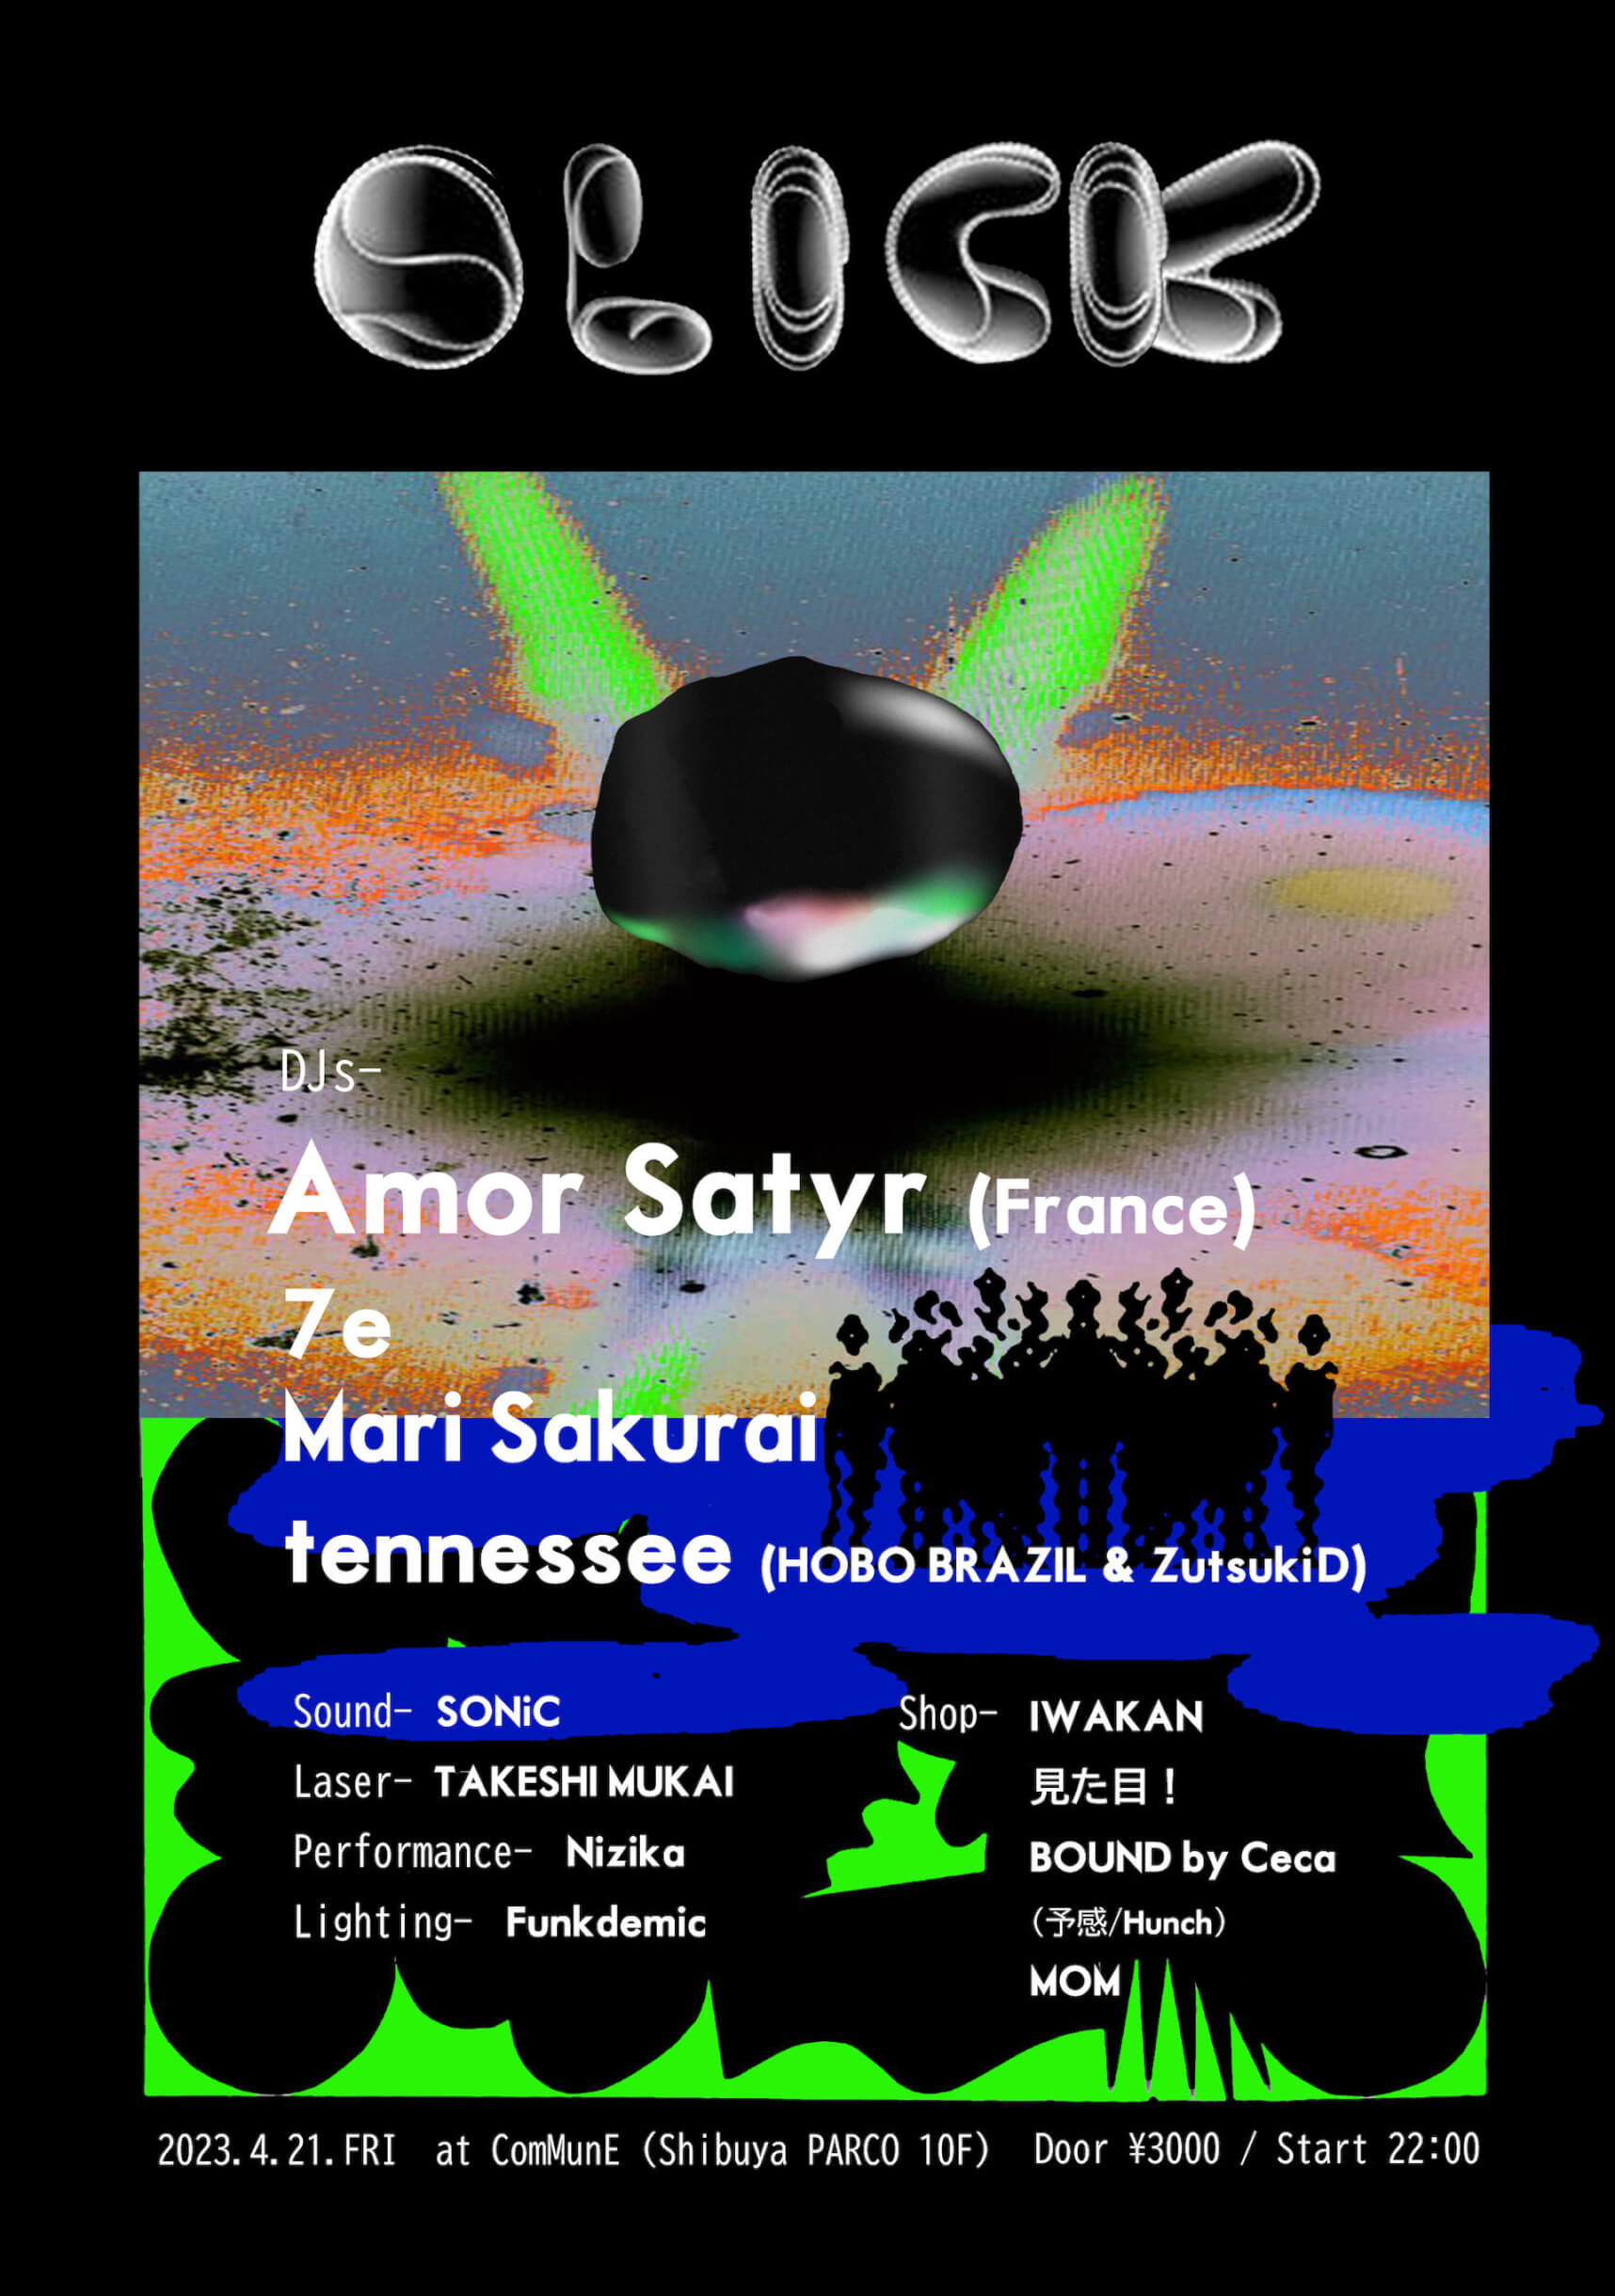 Amor Satyrの初来日が決定｜オープンマインドな居場所を提供するレイヴパーティー＜SLICK＞、渋谷PARCO屋上のComMunEにて開催 music230407-slick